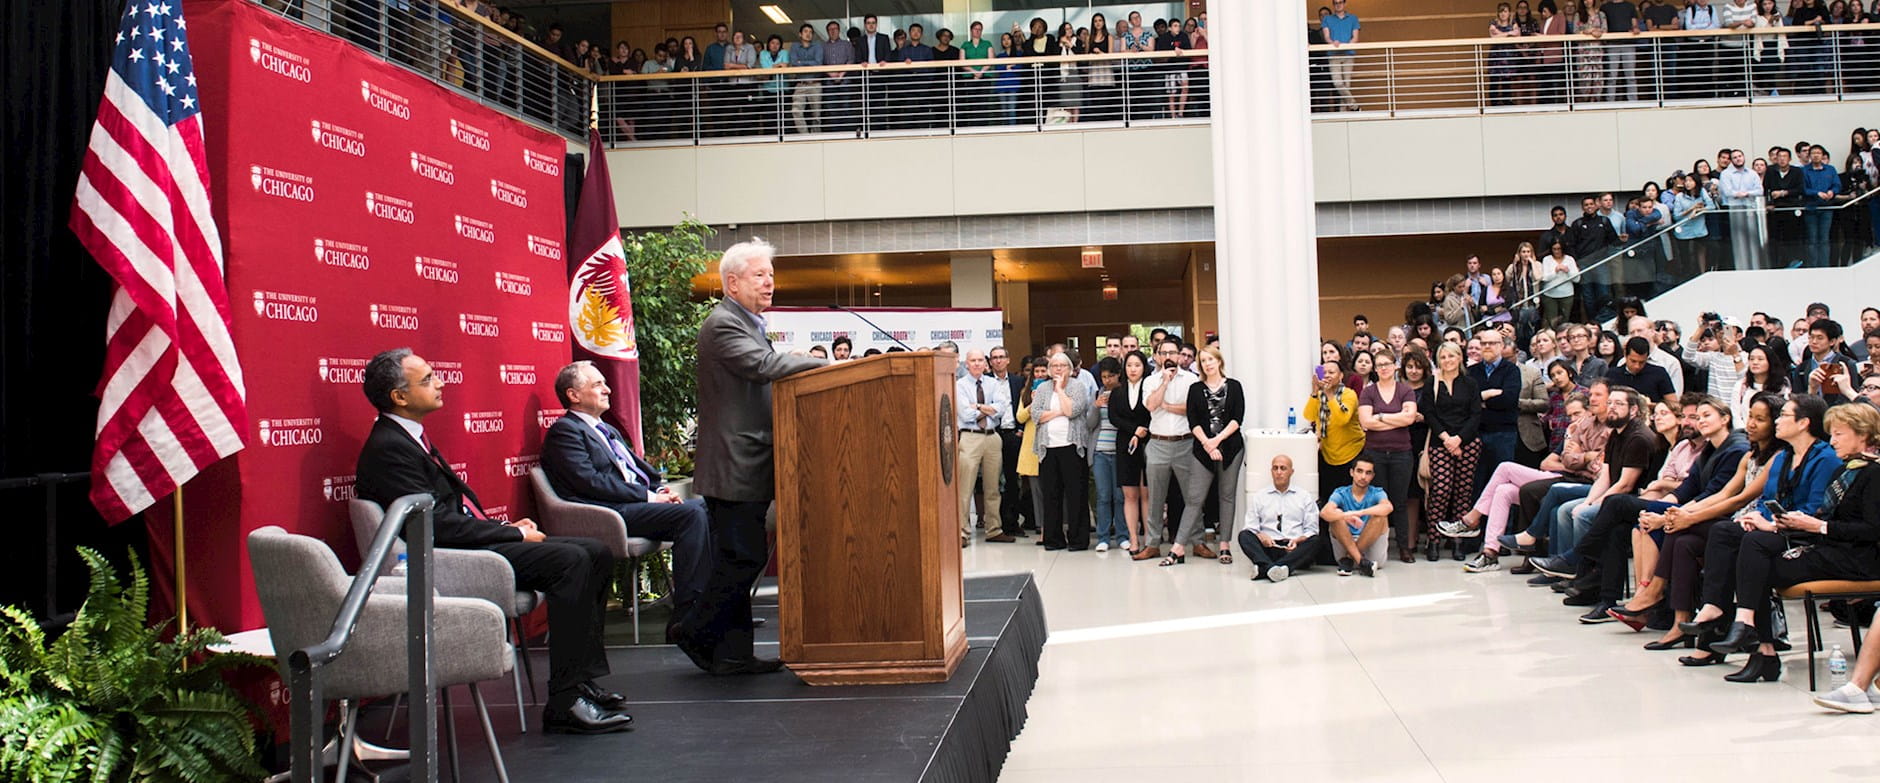 Richard thaler speaking at a podium during his Nobel Prize press conference